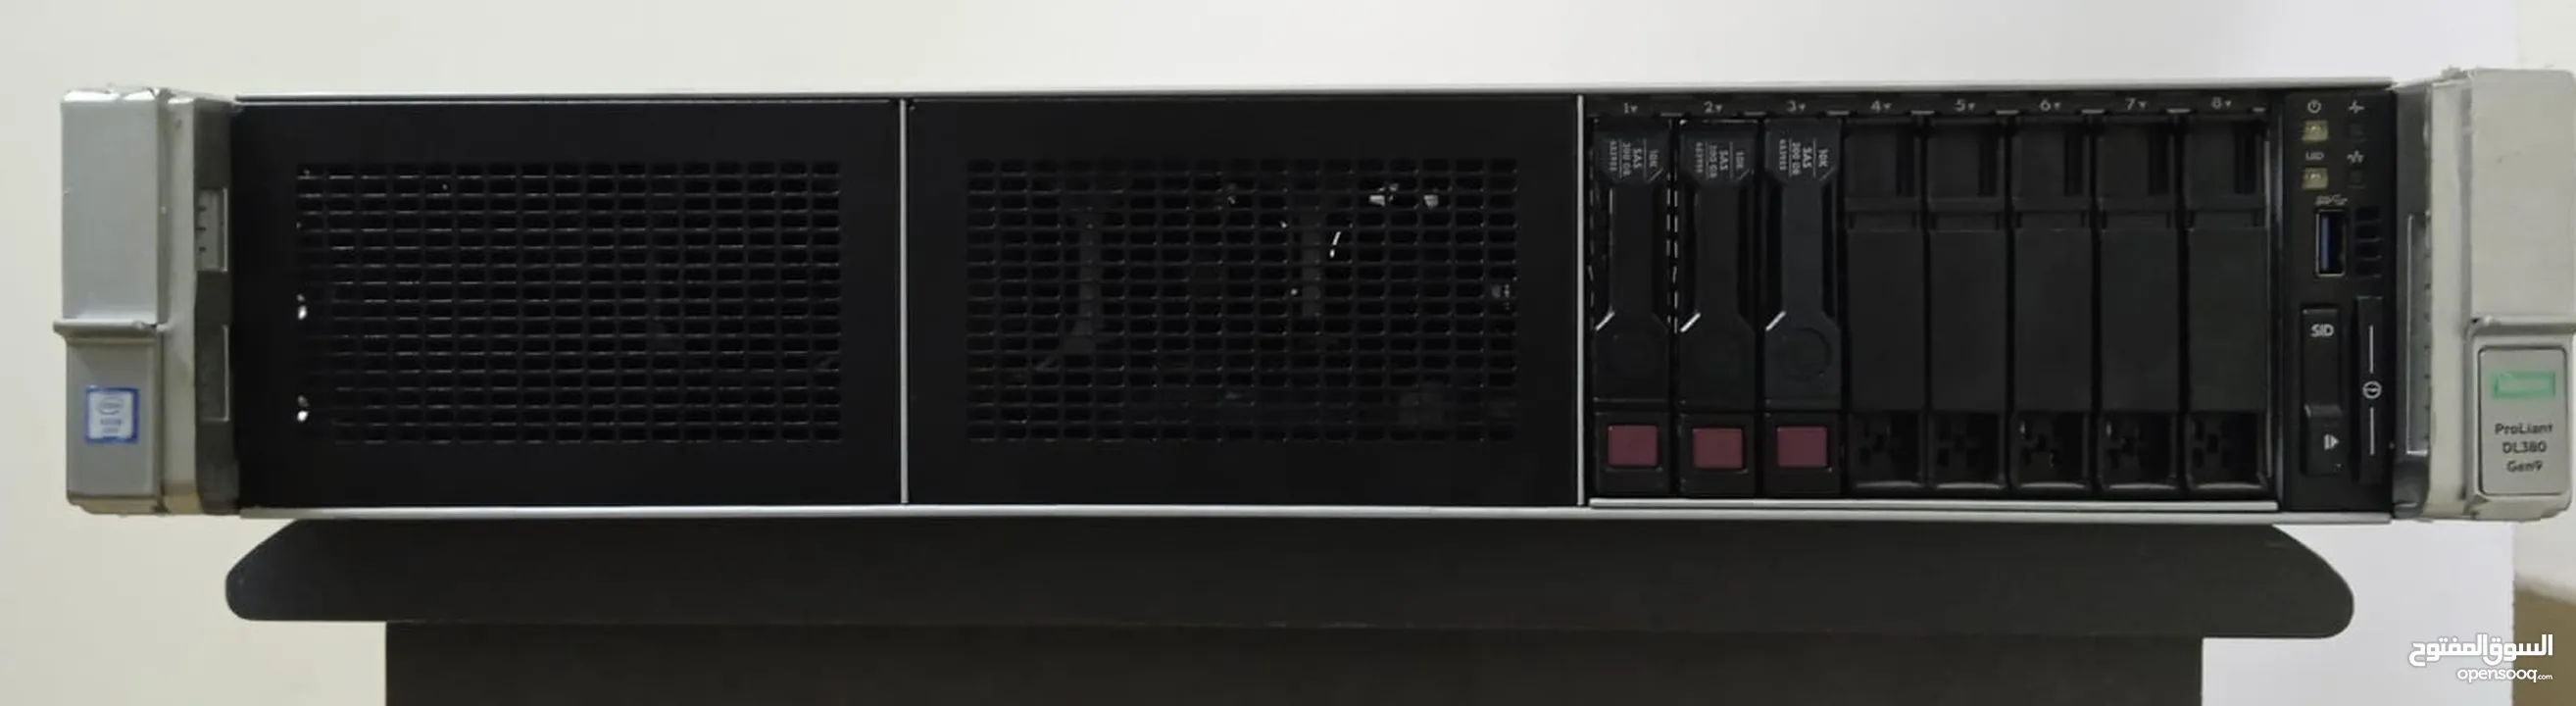 Rack Server HP   ProLiant DL380 Gen9  Intel(R) Xeon(R)   CPU E5-2620 v3 @ 2.40GHz  2 Xeon processors